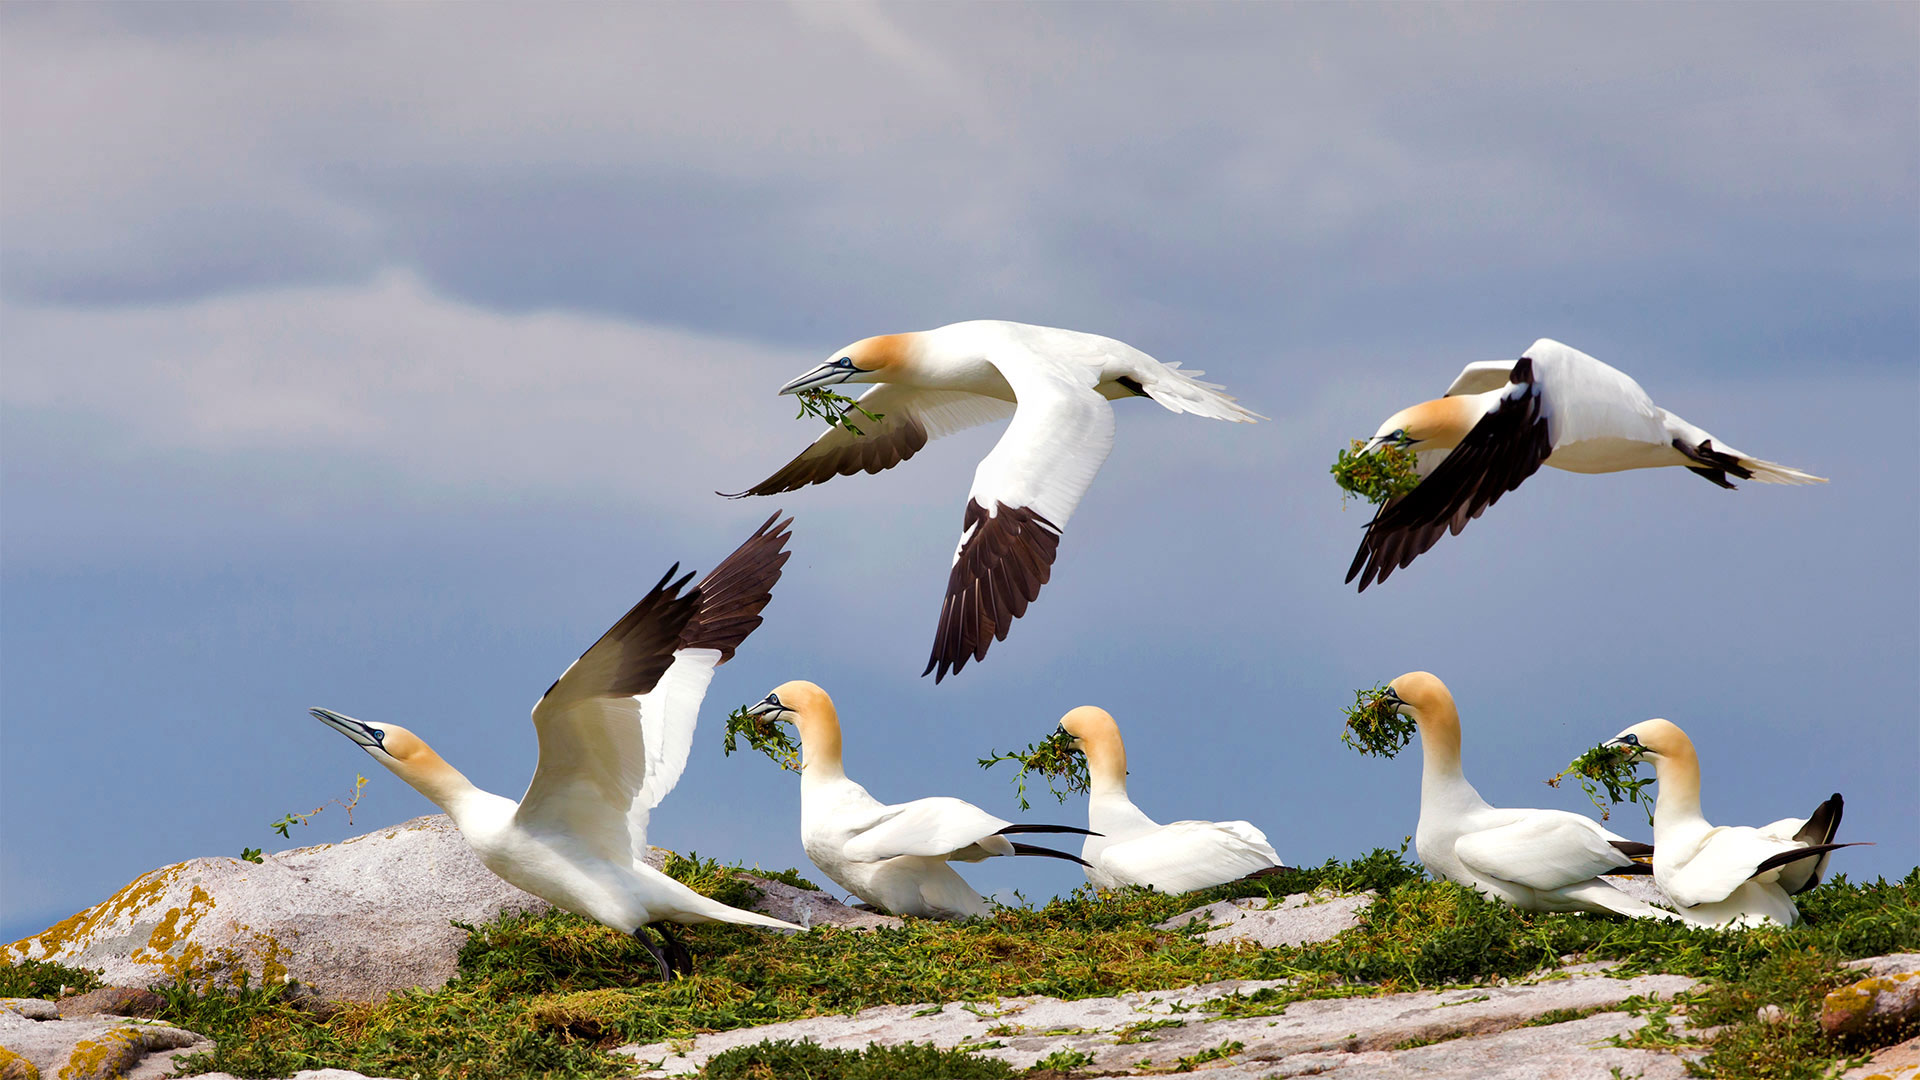 Northern gannets on Great Saltee Island, Ireland - Danny Green